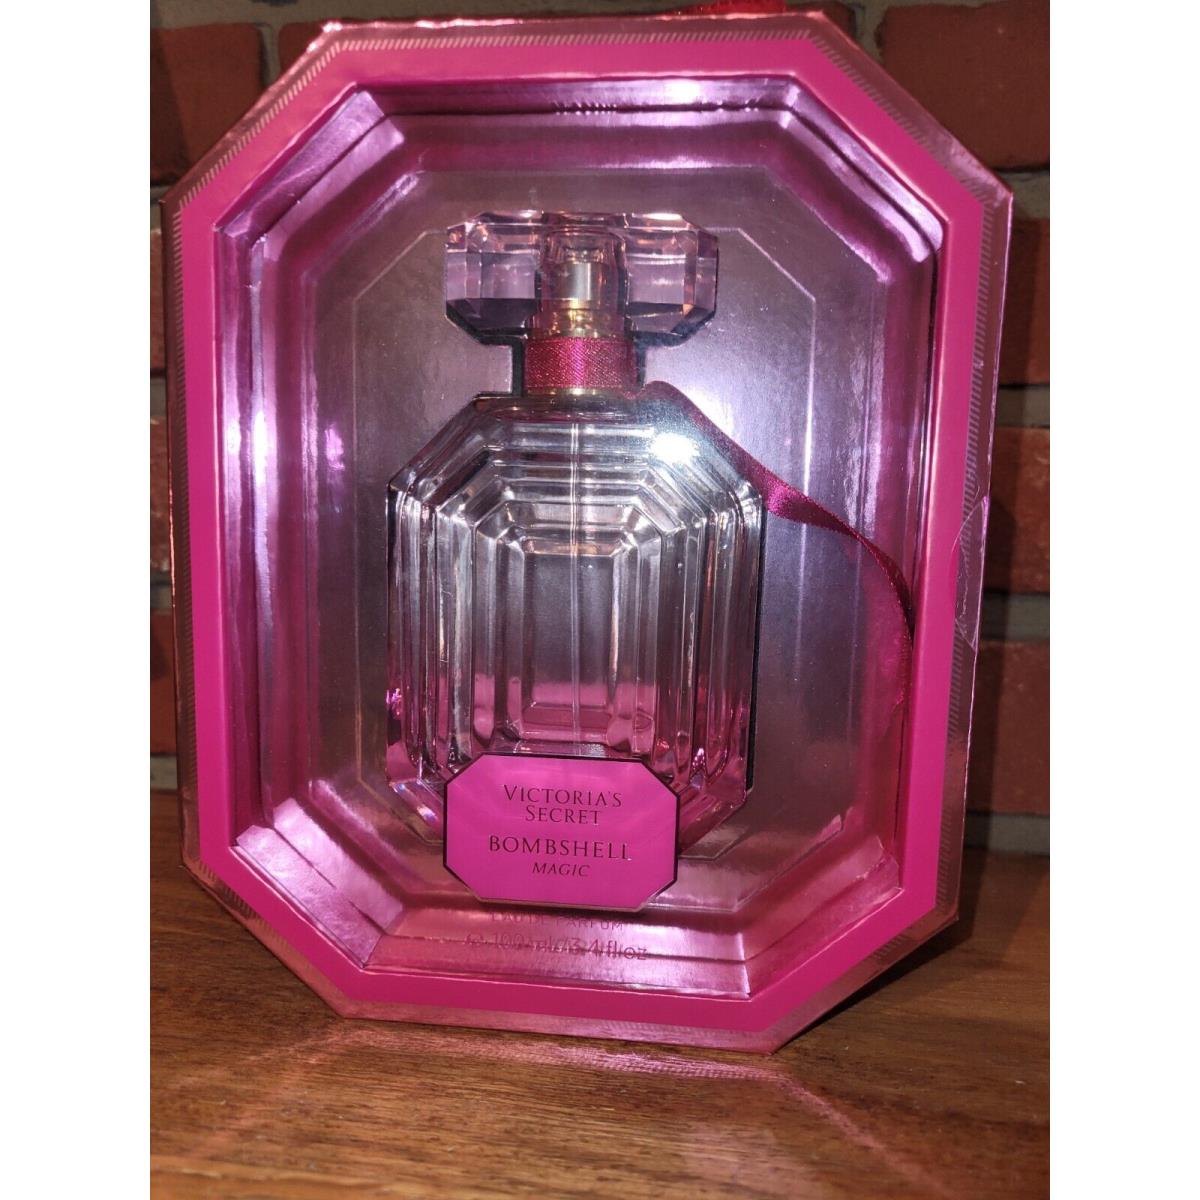 Victoria`s Secret Bombshell Magic Fragrance Edp 3.4 FL OZ Collector`s Edition